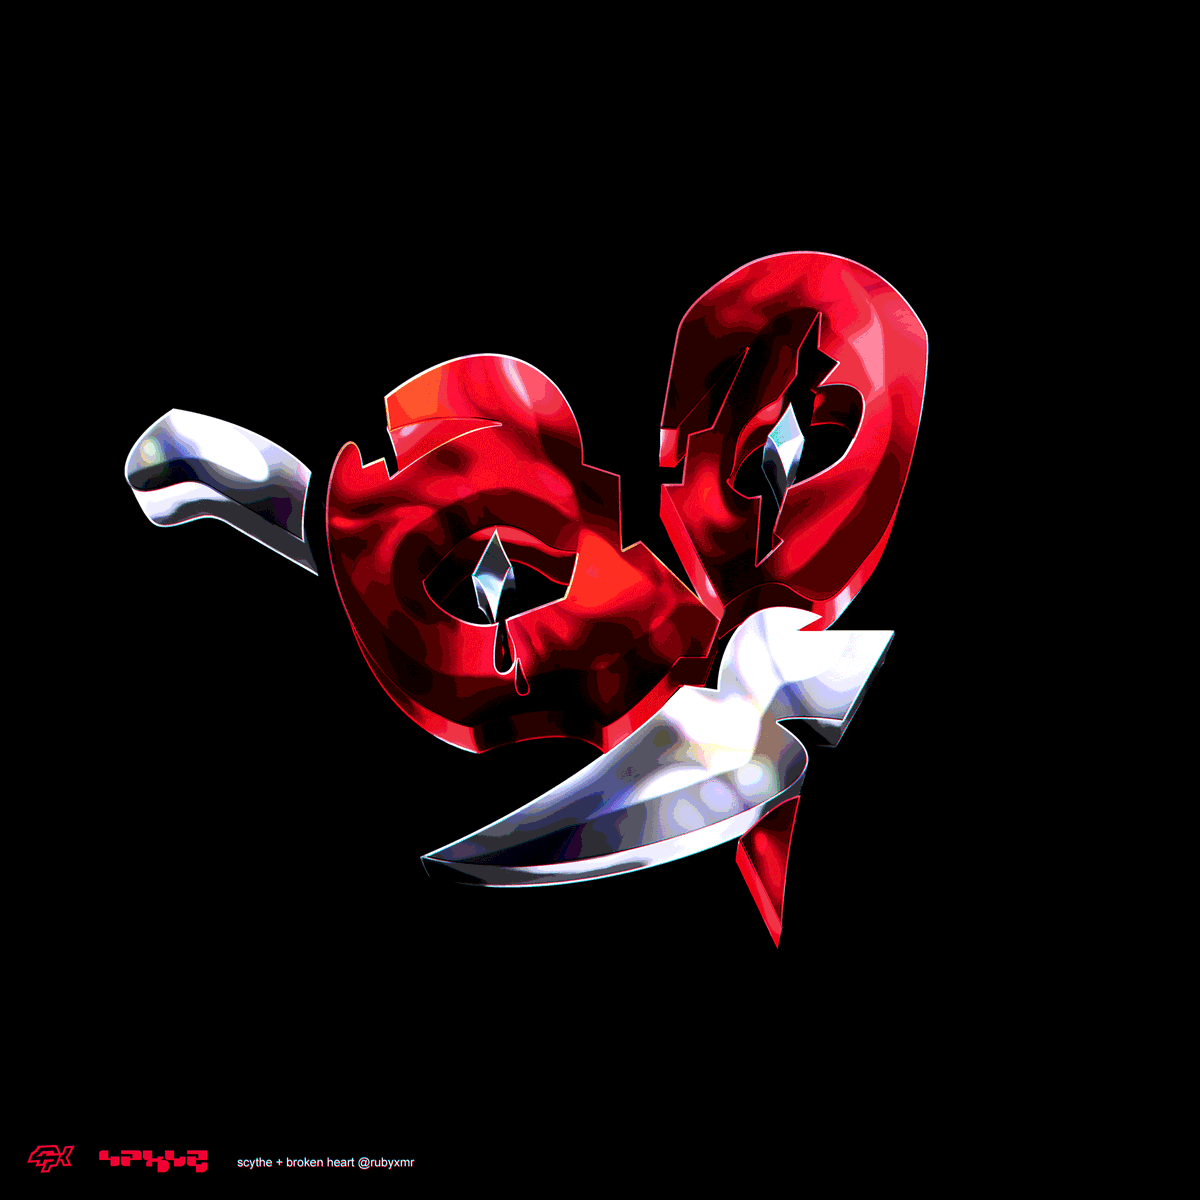 repost - scythe + broken heart logo clientwork.